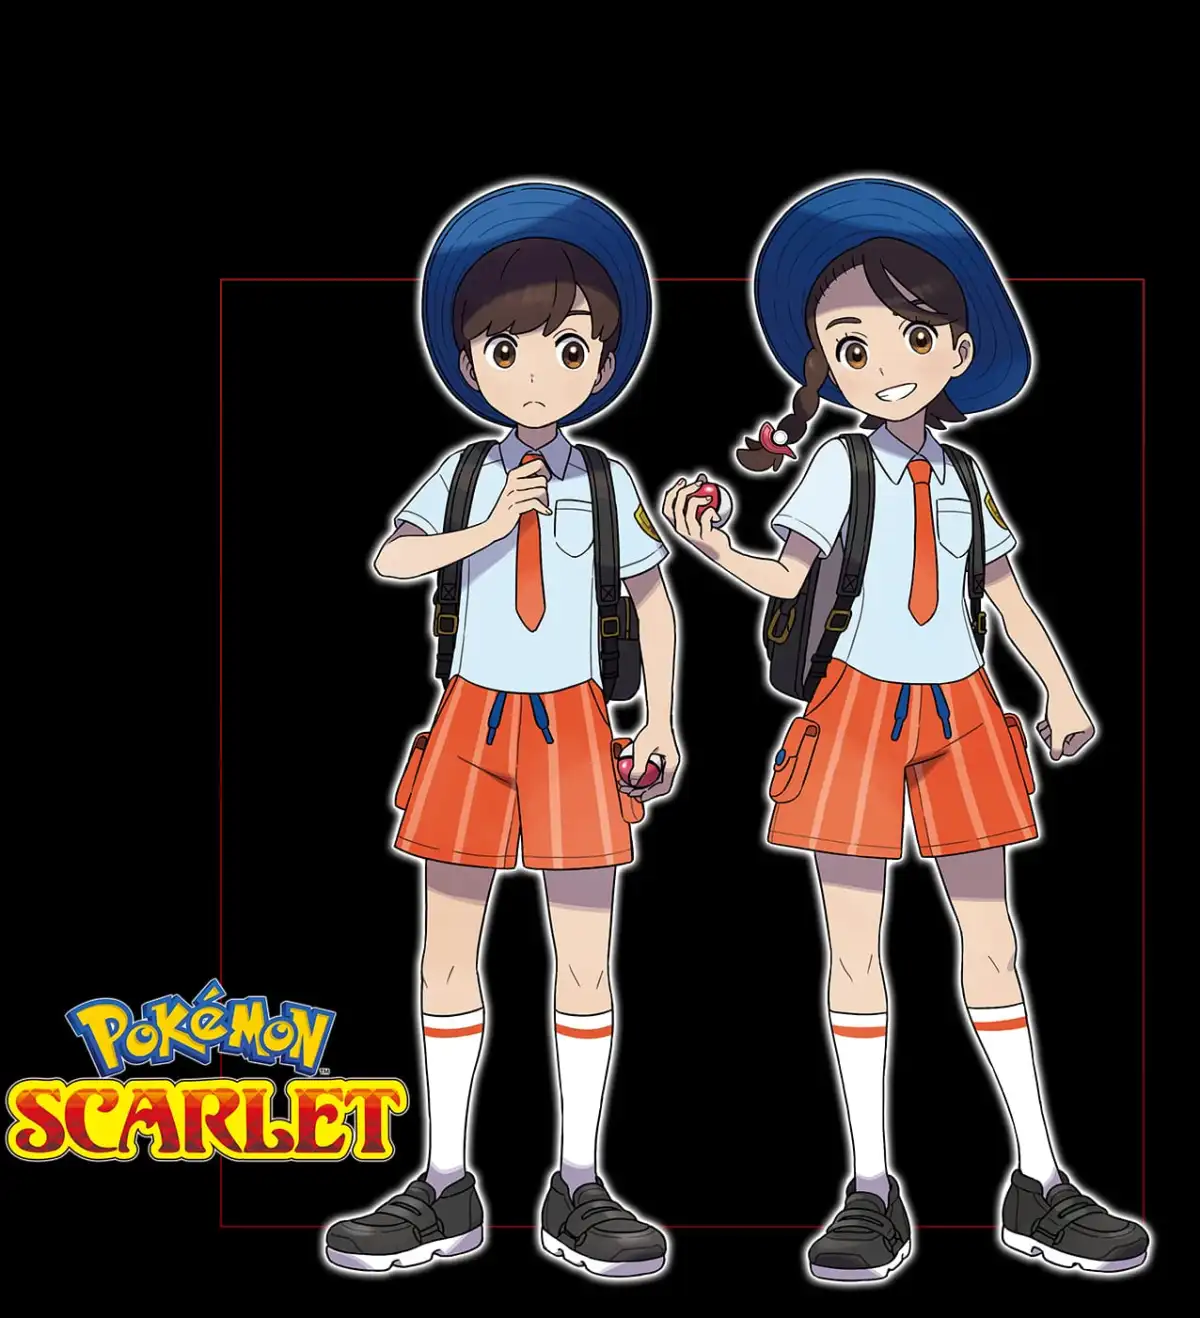 New Pokémon and New Starter Details Revealed for Scarlet and Violet